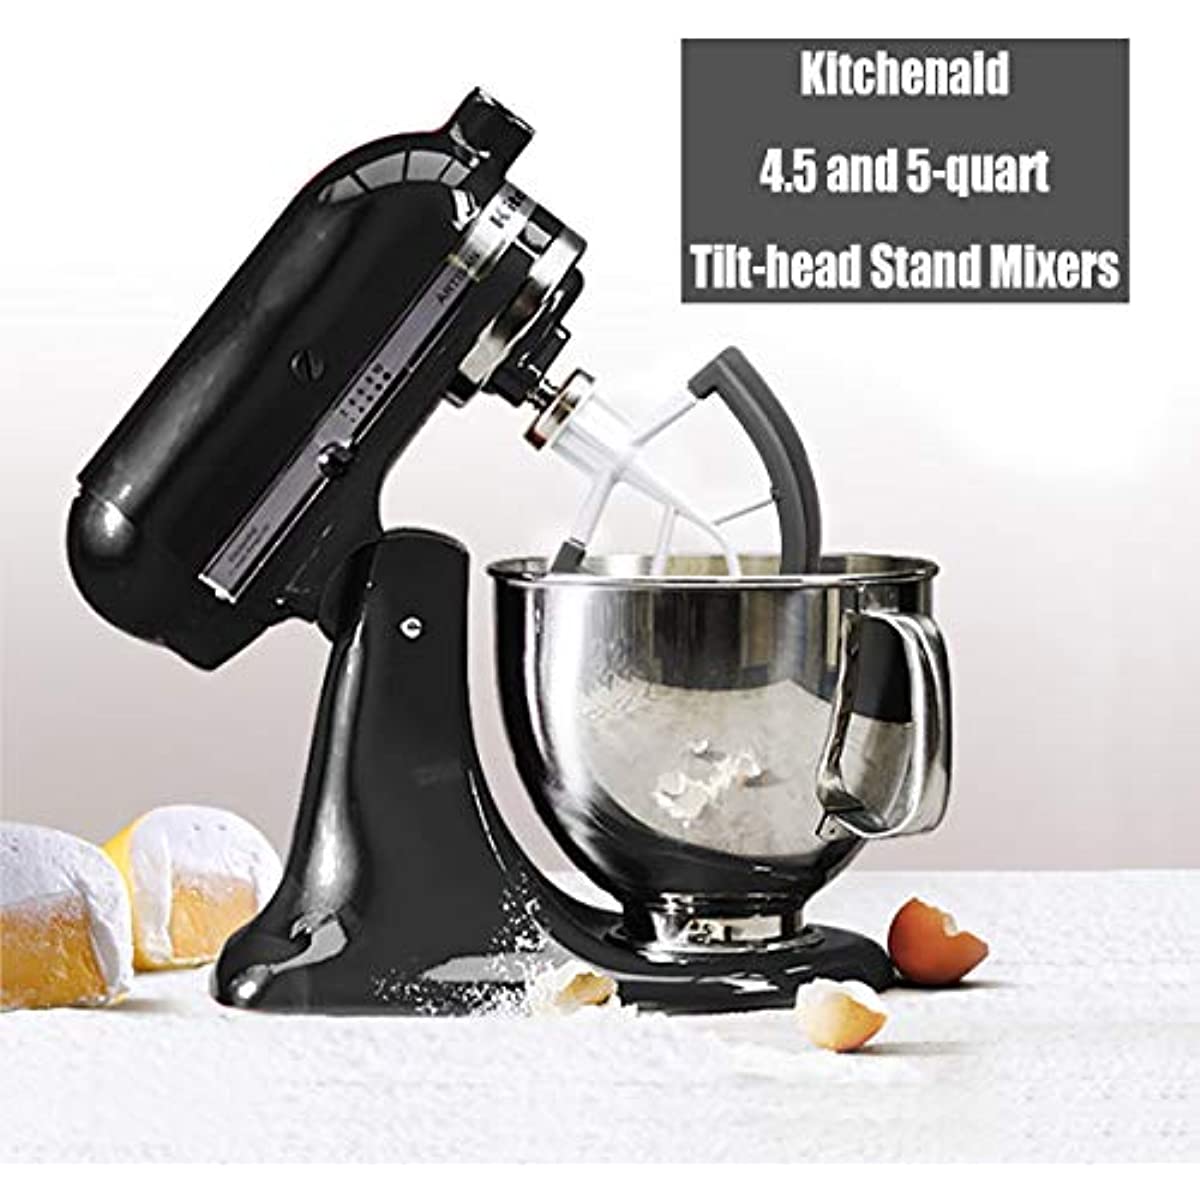 KitchenAid 4.5 Quart Tilt Head Stand Mixer in Onyx Black and